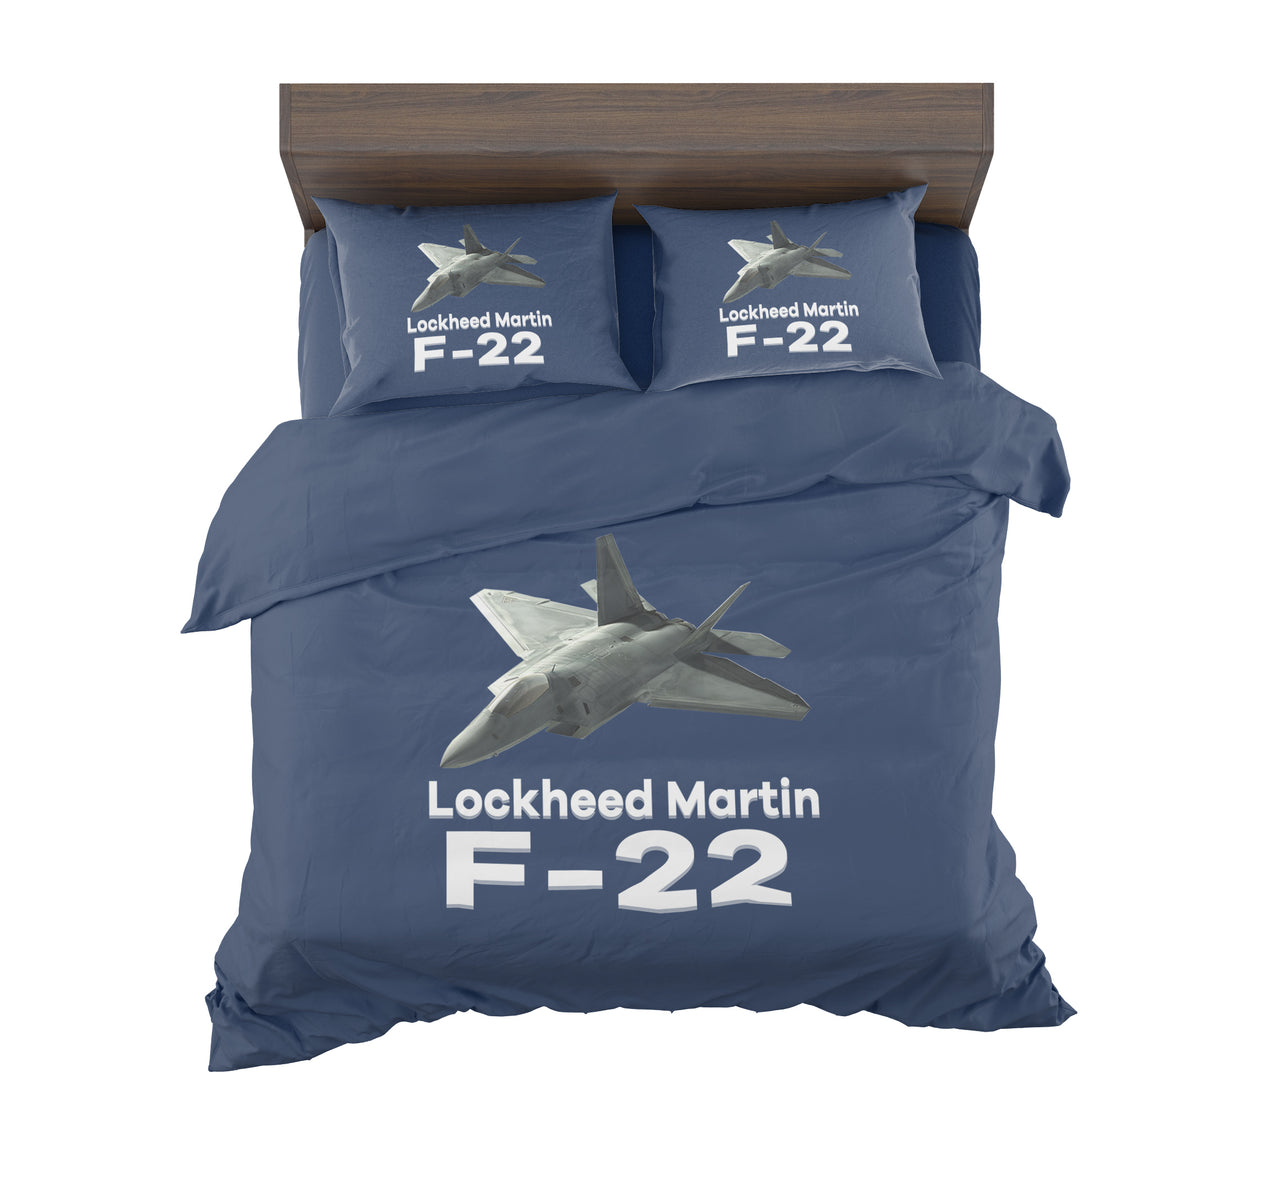 The Lockheed Martin F22 Designed Bedding Sets